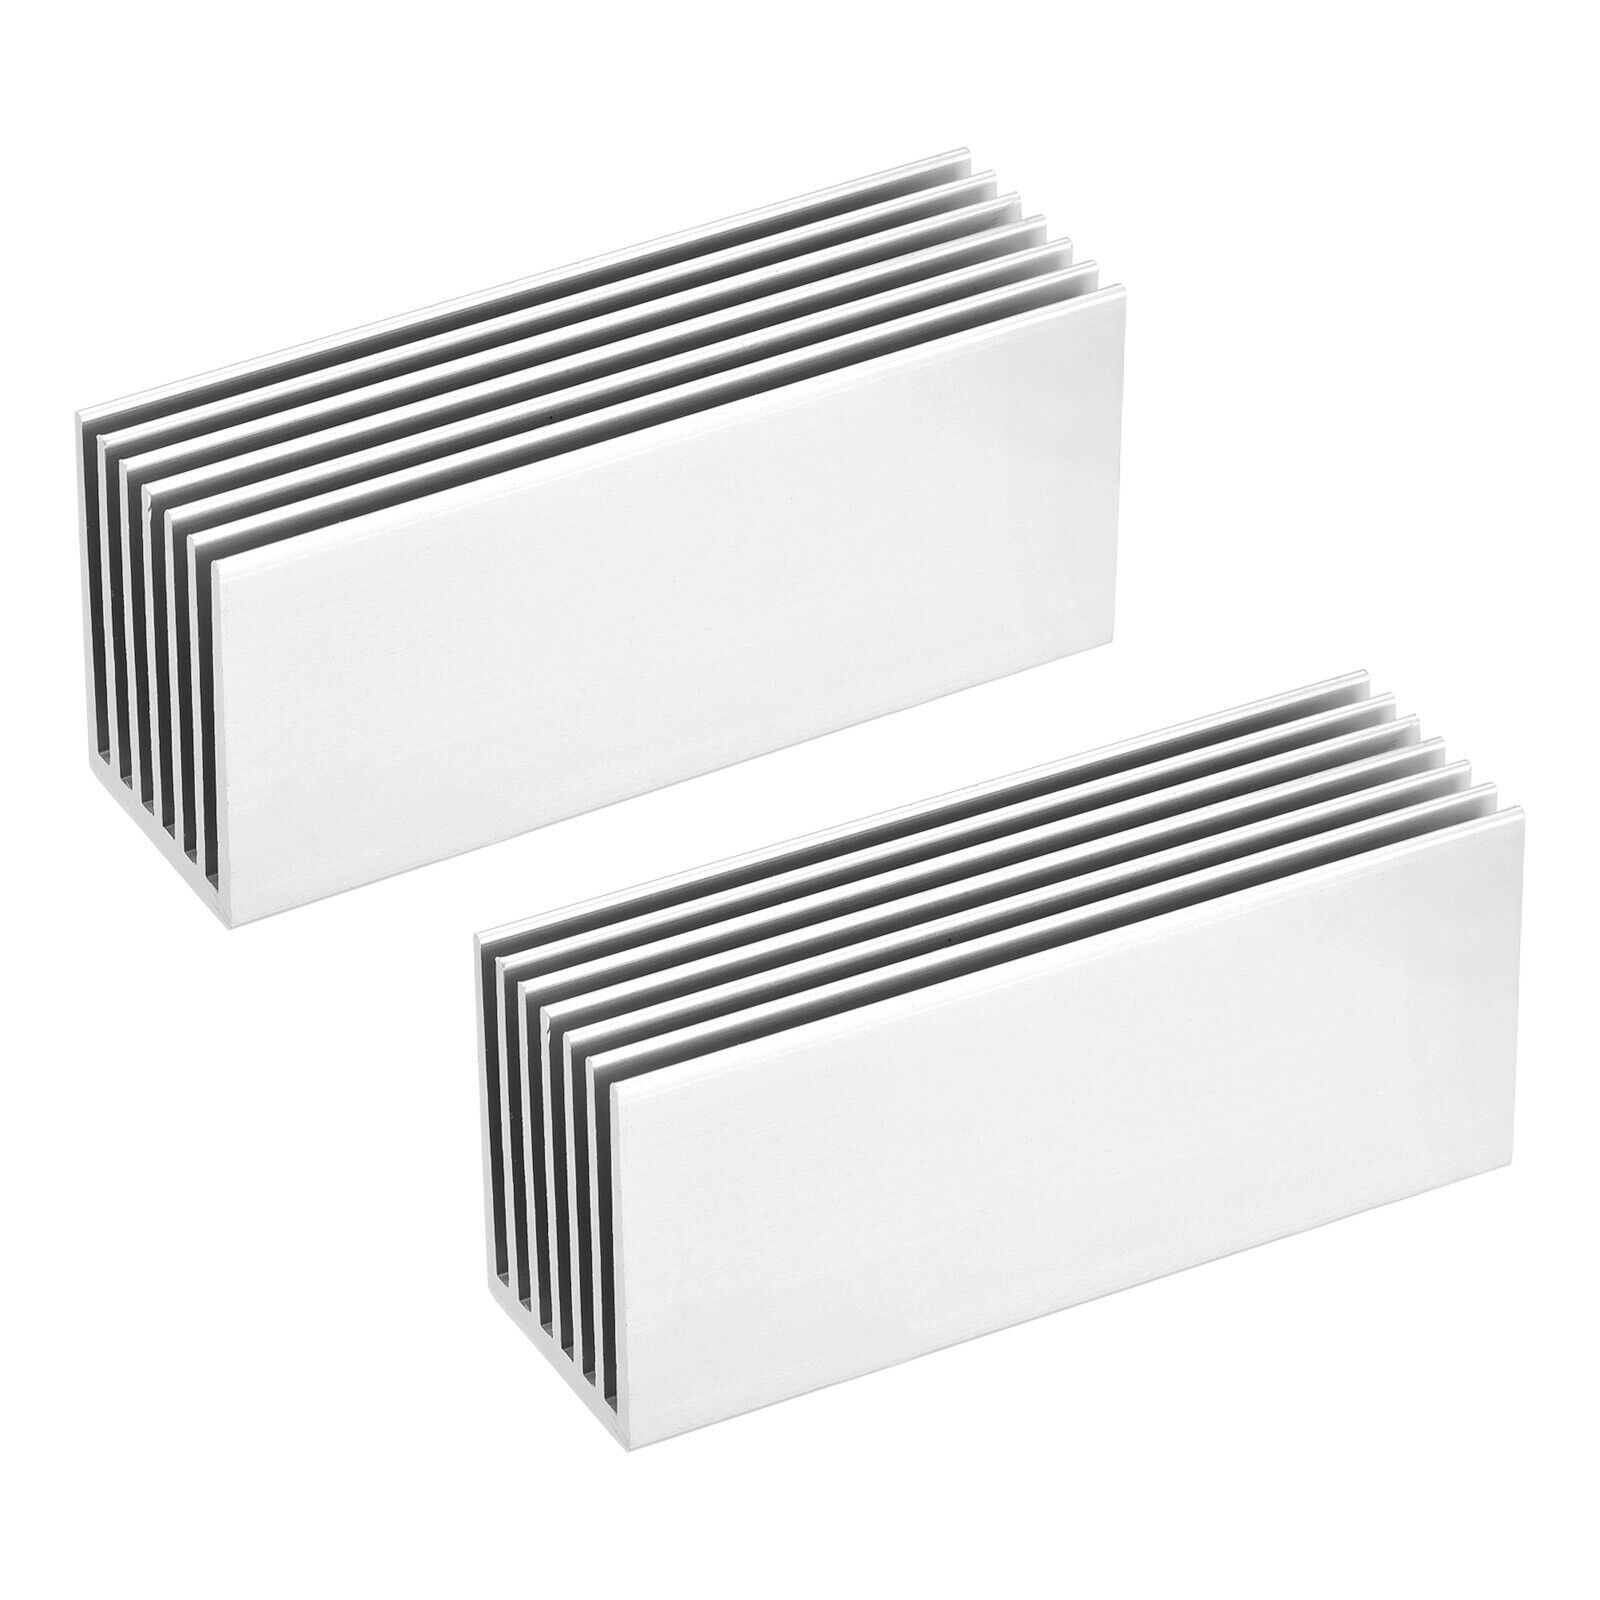 2 Pack M.2 SSD Heatsink Alloy Aluminum Cooling Sink 70*22*30mm, Silver Tone